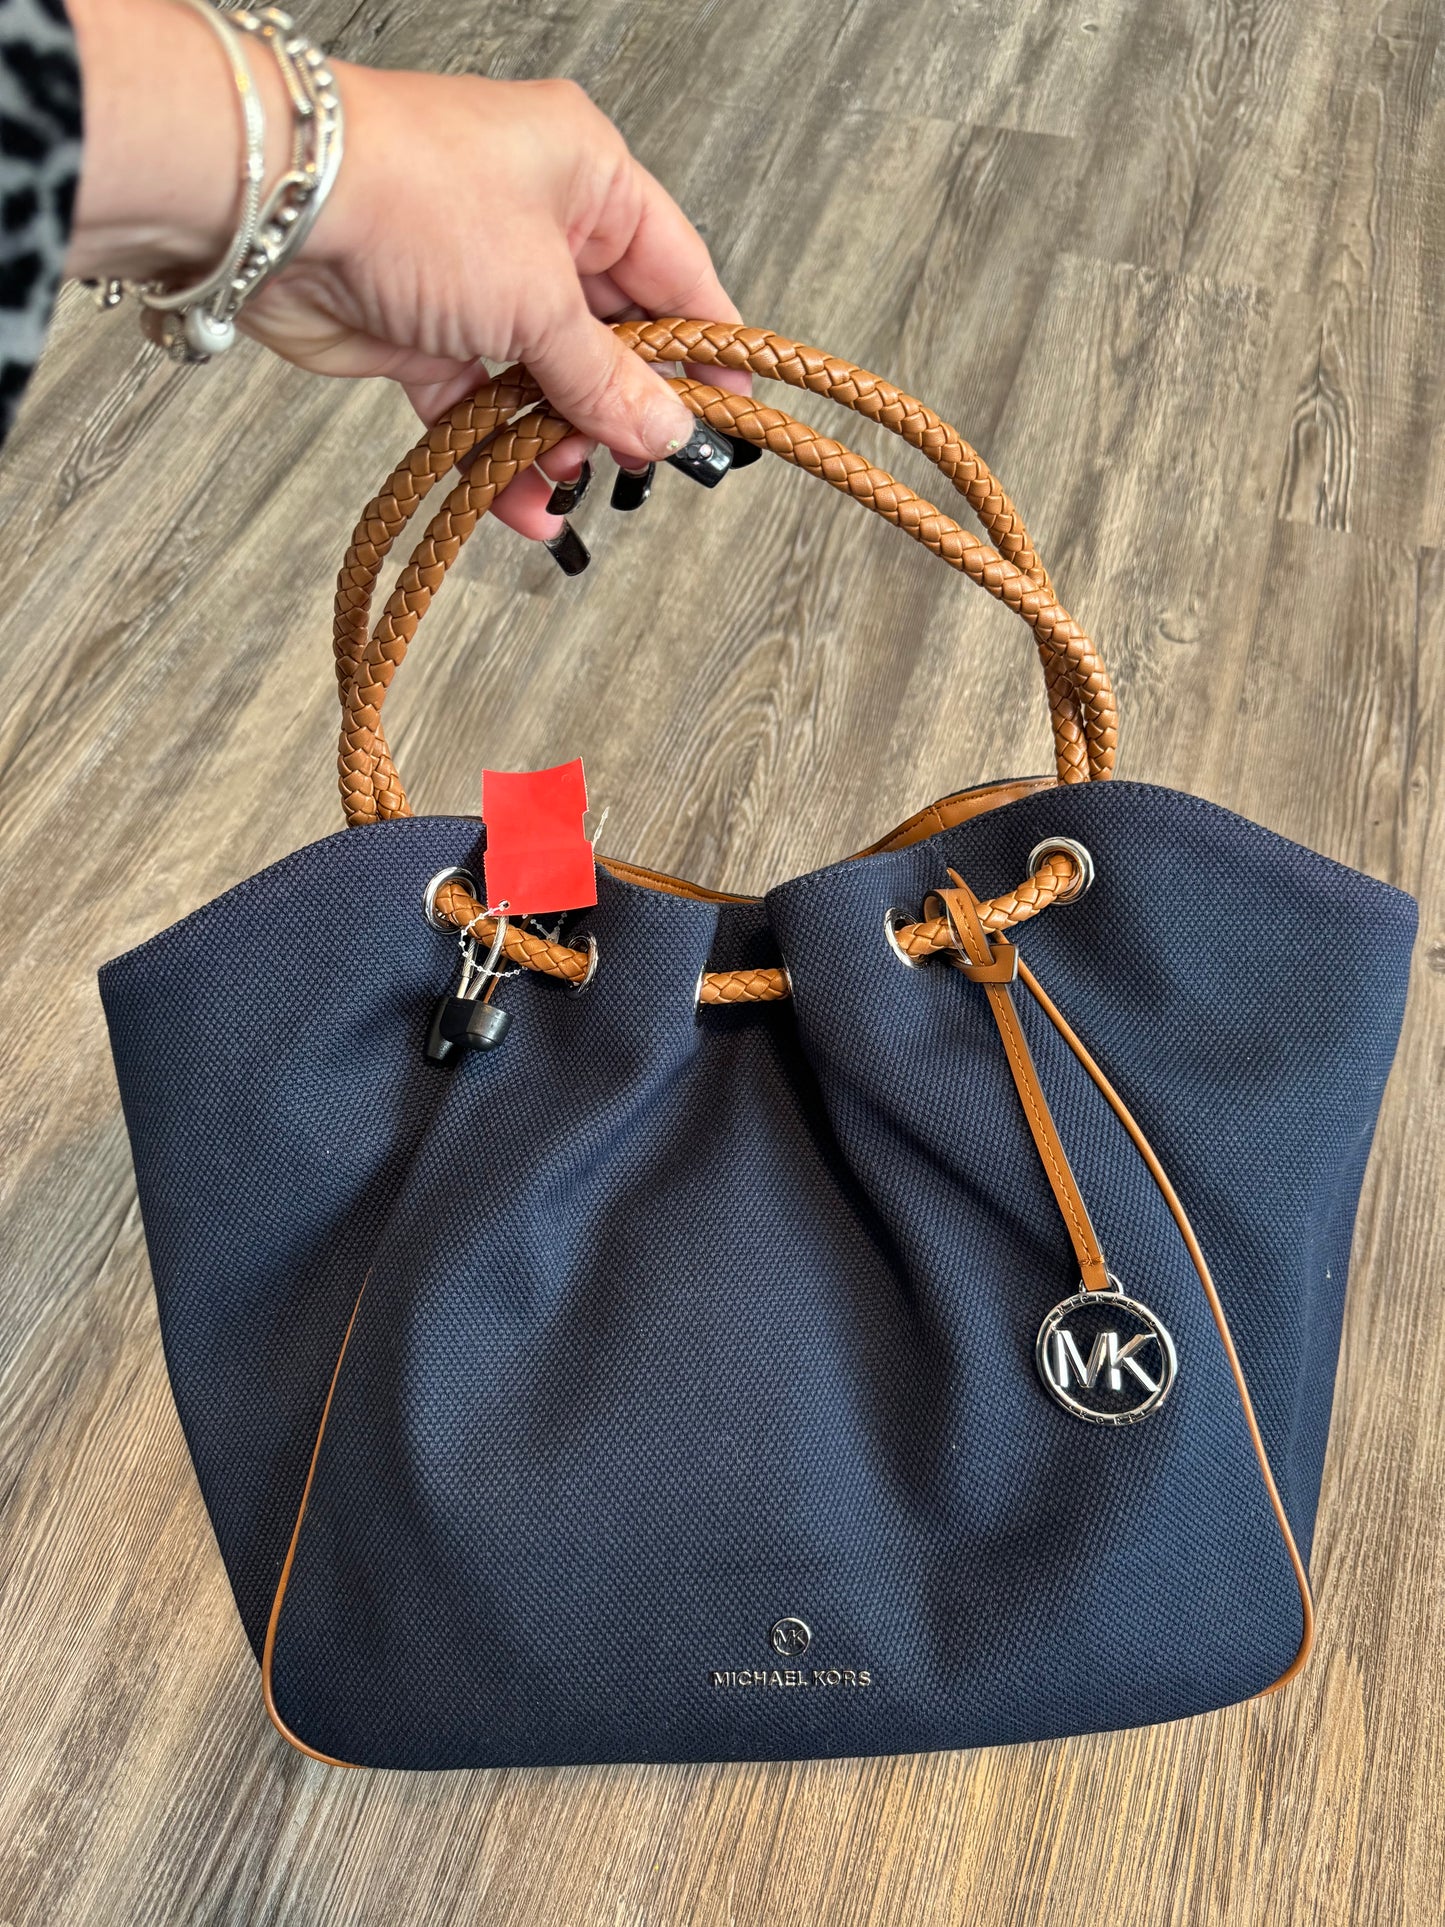 Handbag By Michael By Michael Kors  Size: Large